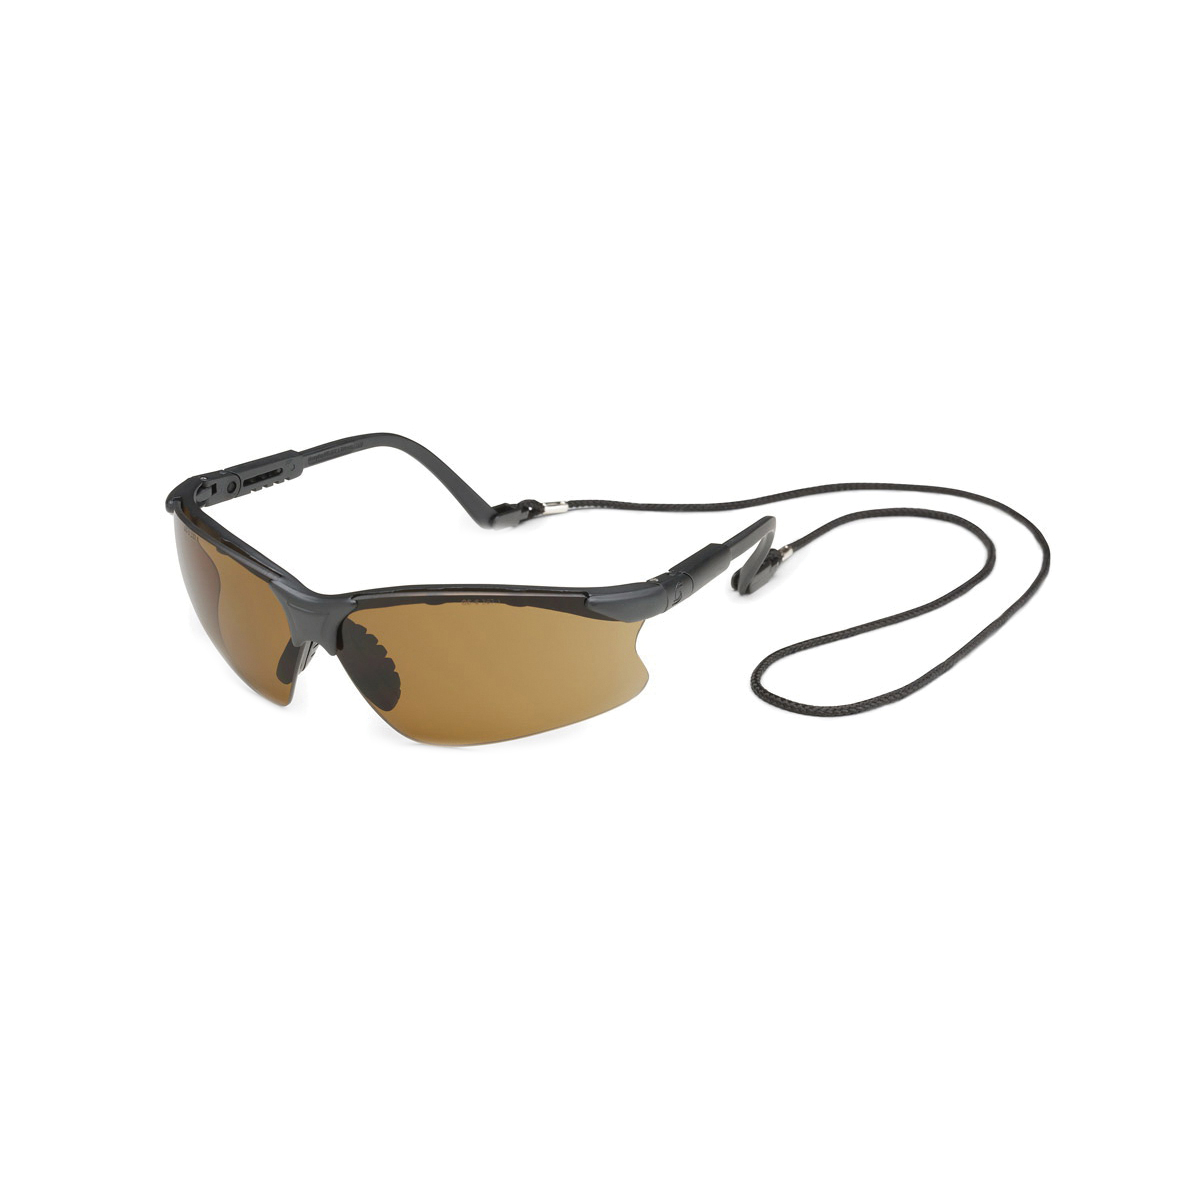 Gateway Safety® Scorpion® 16GB86 Safety Glasses, Unisex, Mocha Lens, Scratch-Resistant Lens, Black Frame, Ratchet Temple